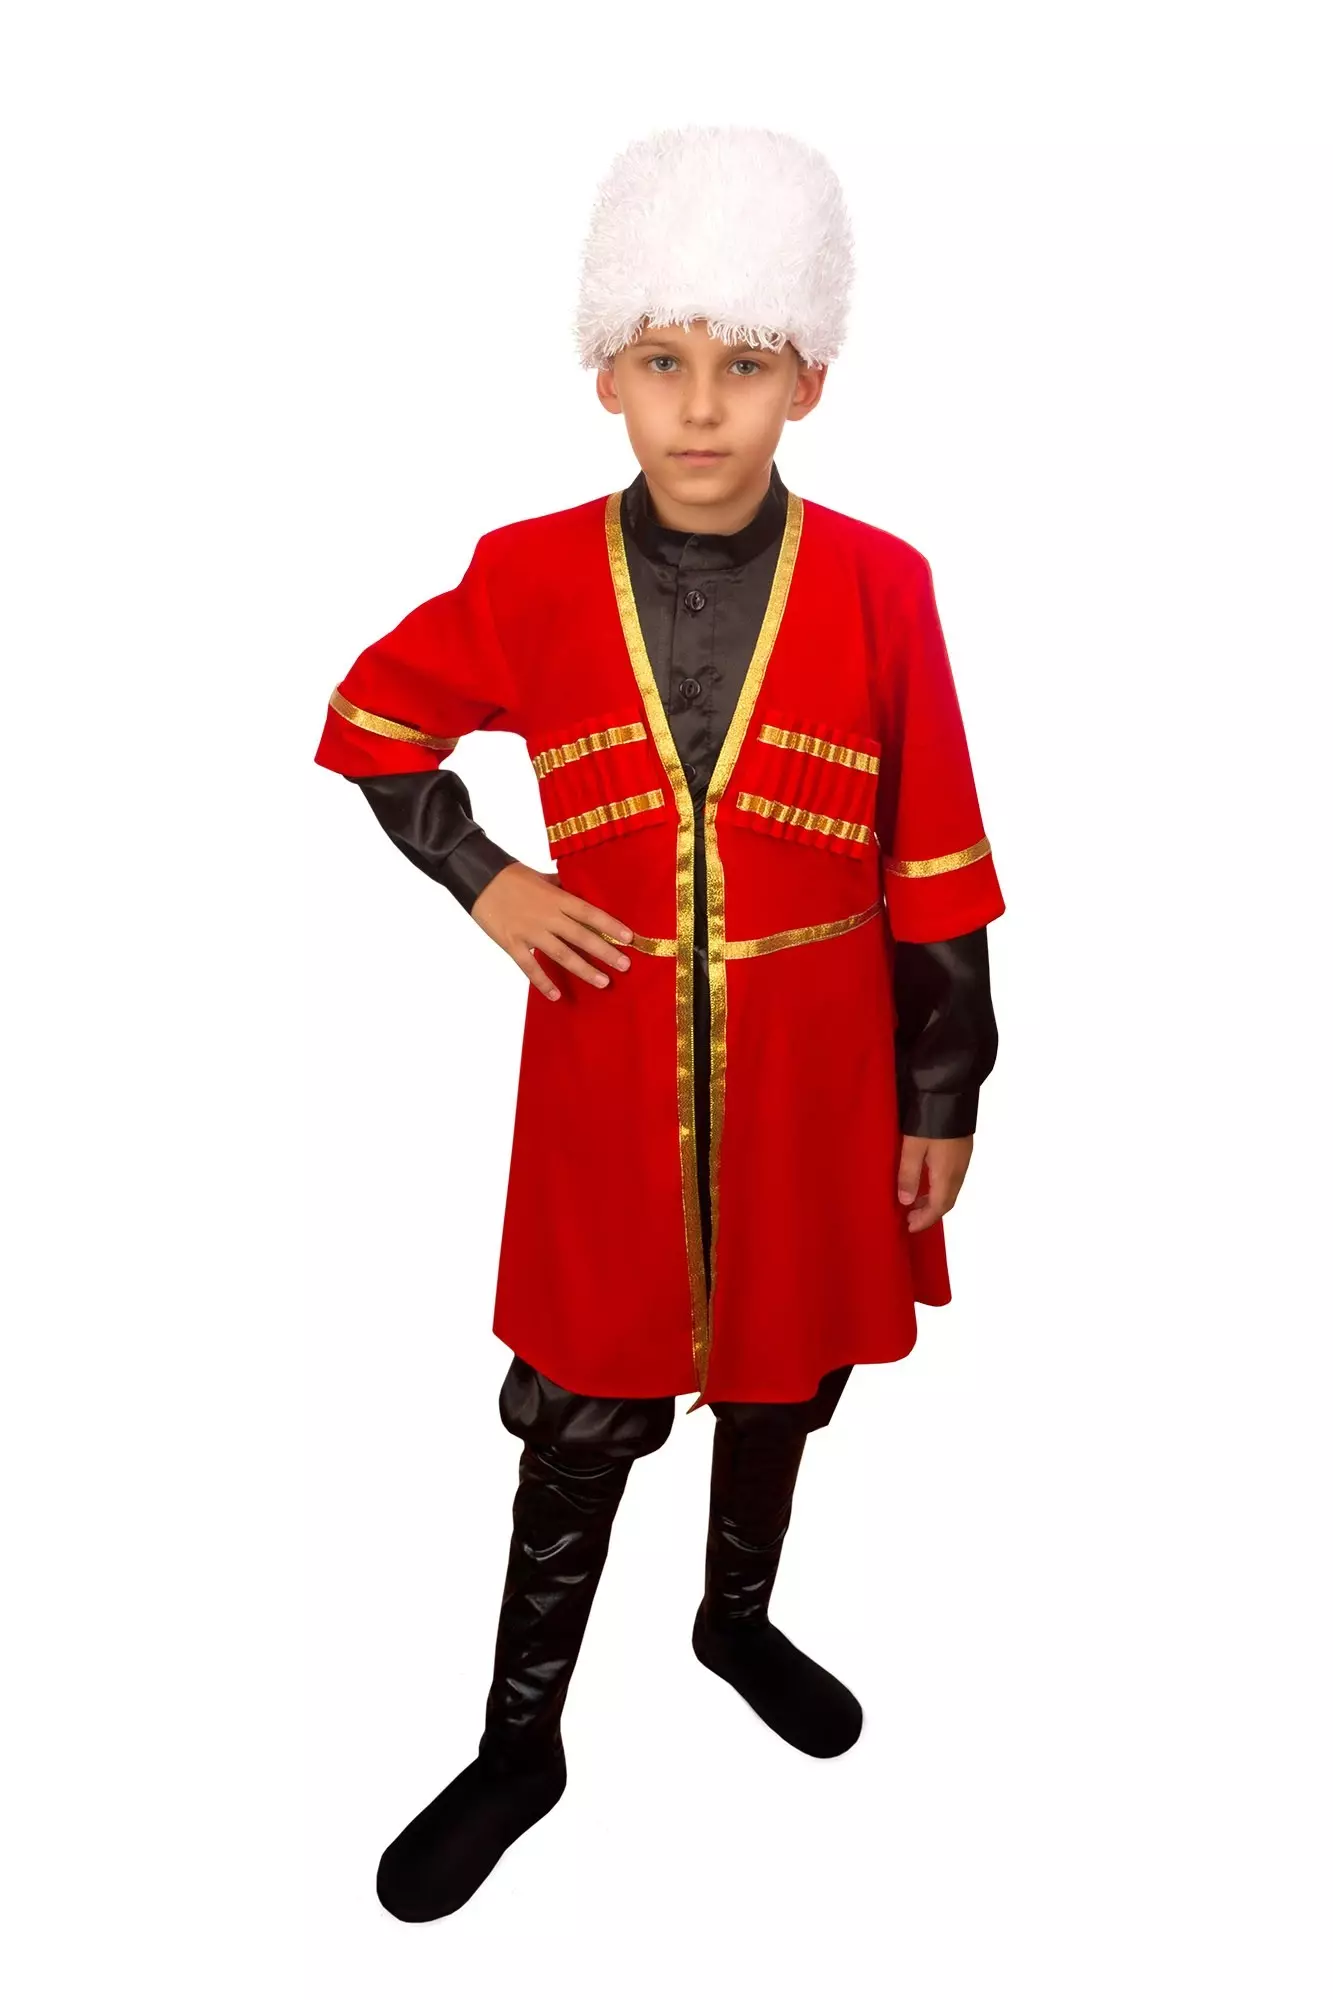 Грузин ұлттық костюмі (67 сурет): грузиннің грузин бейнесі, дәстүрлі киім грузині 1353_50